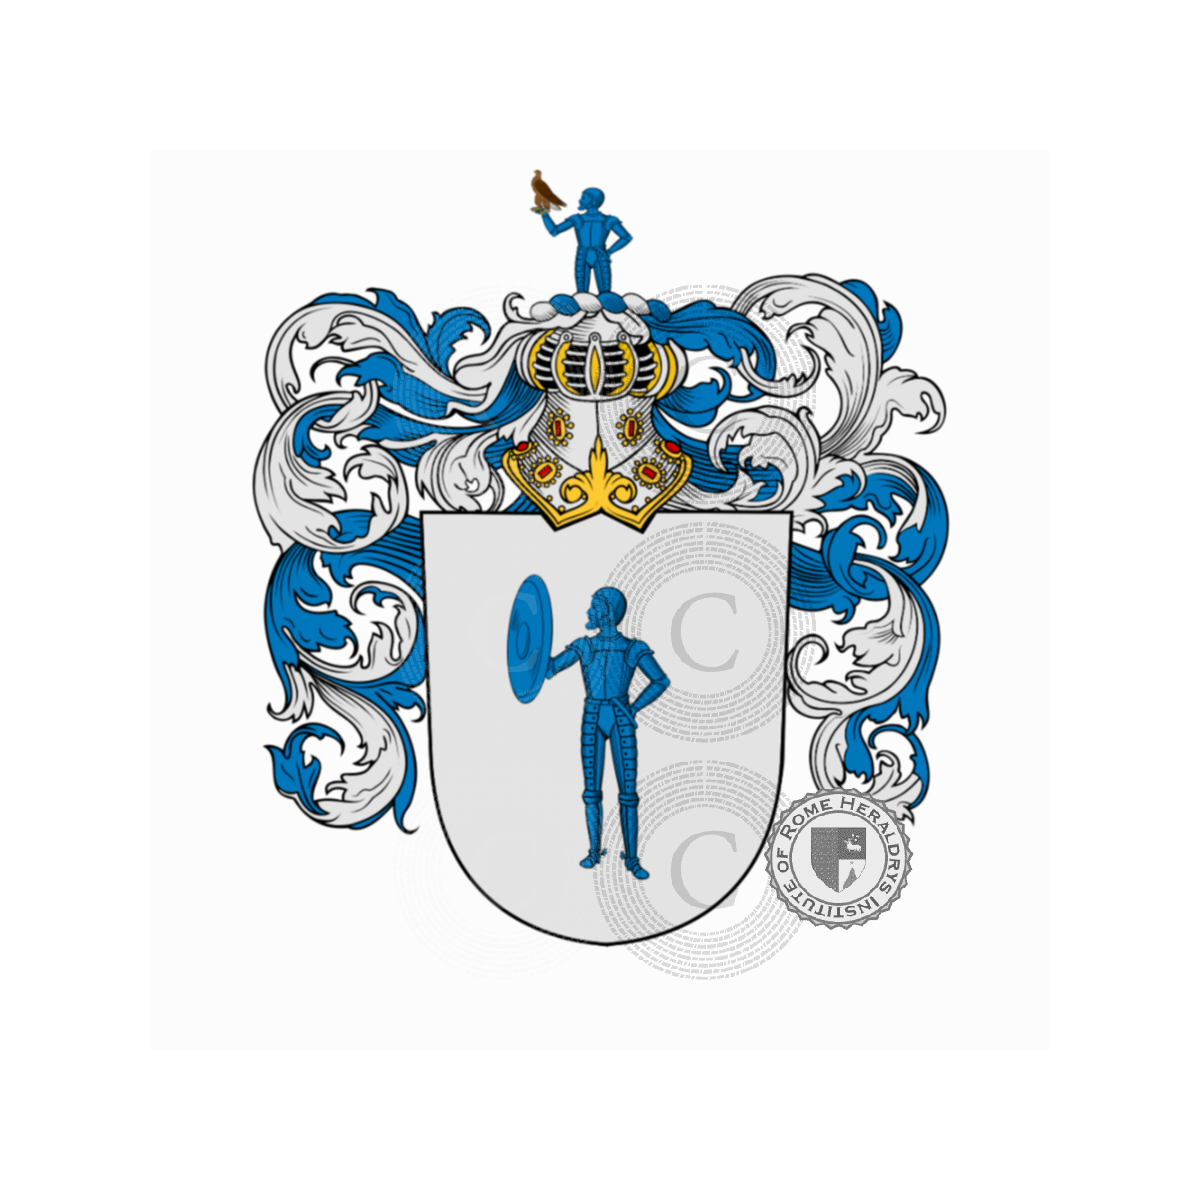 Escudo de la familiaSeifried, Seifriedus,Seifritz,Seifriz